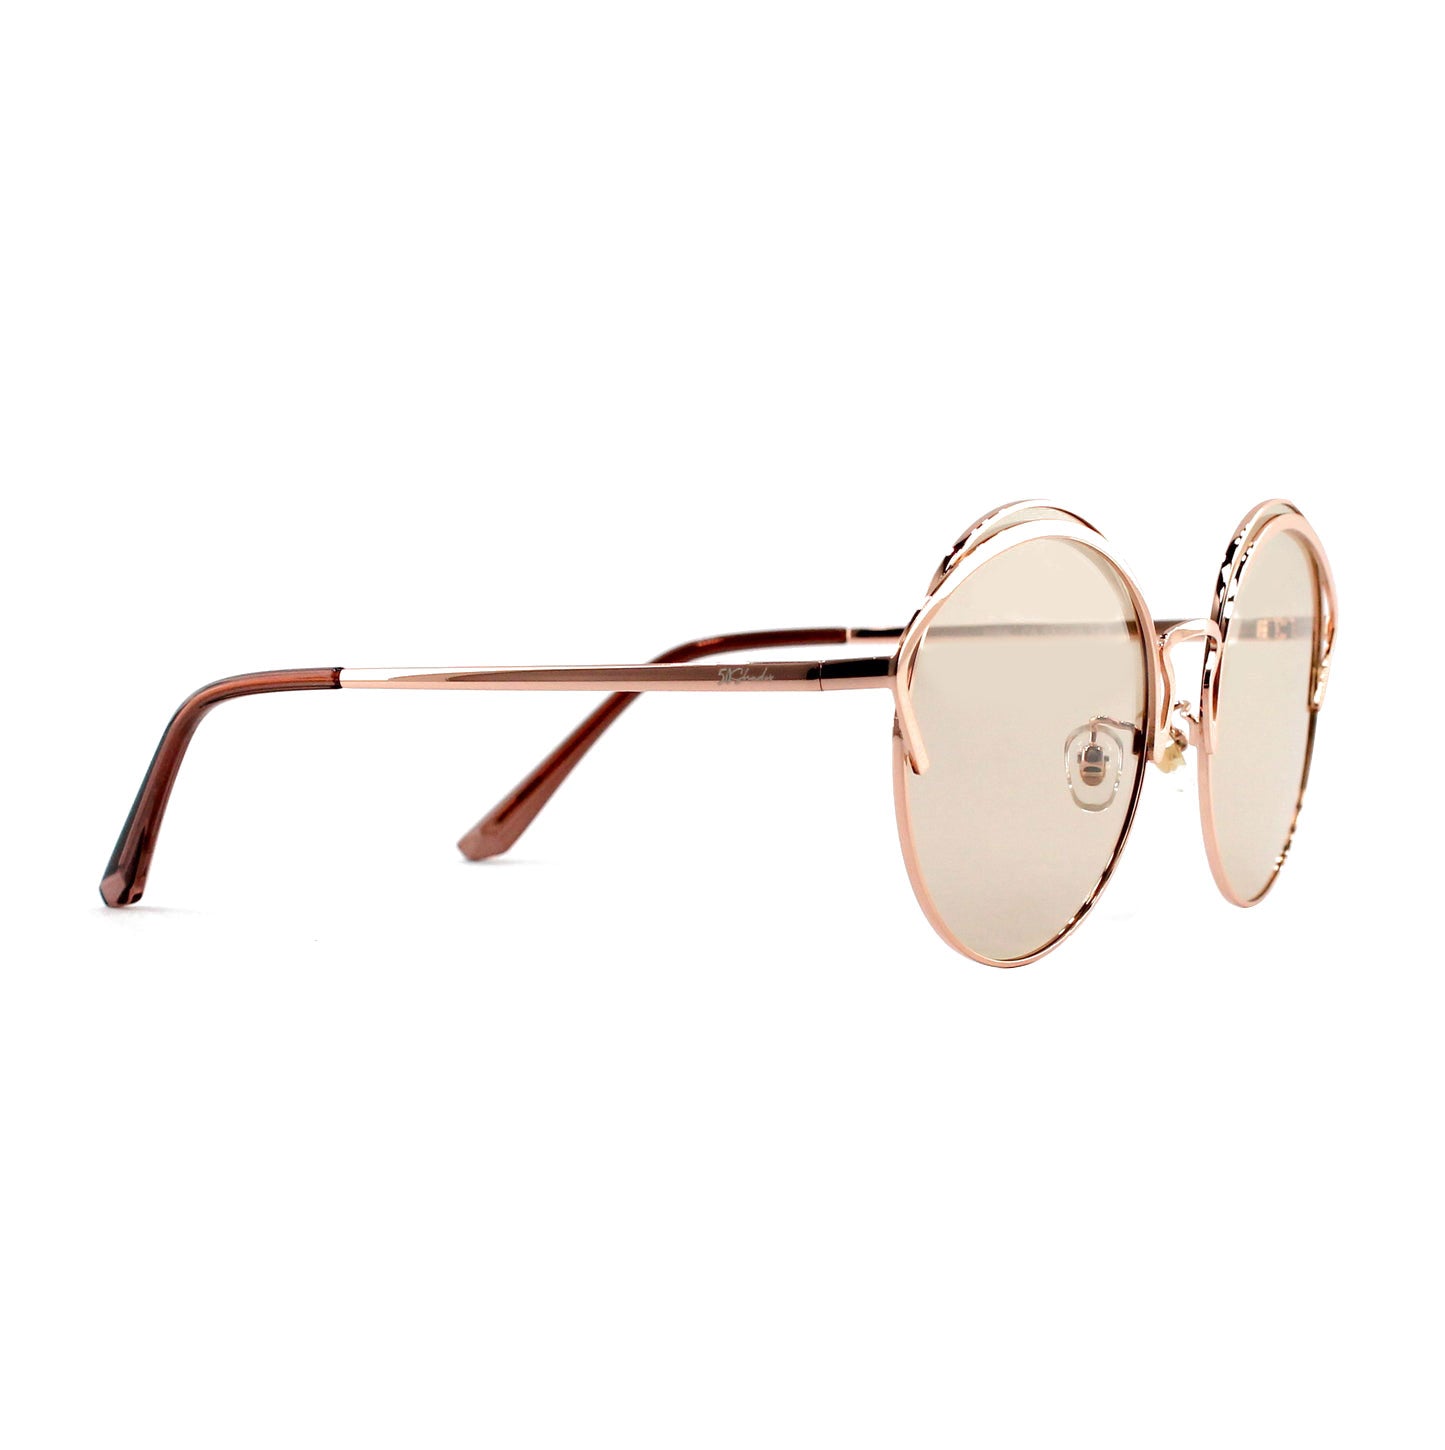 Shades X - Polarized Sunglasses | Model 7056